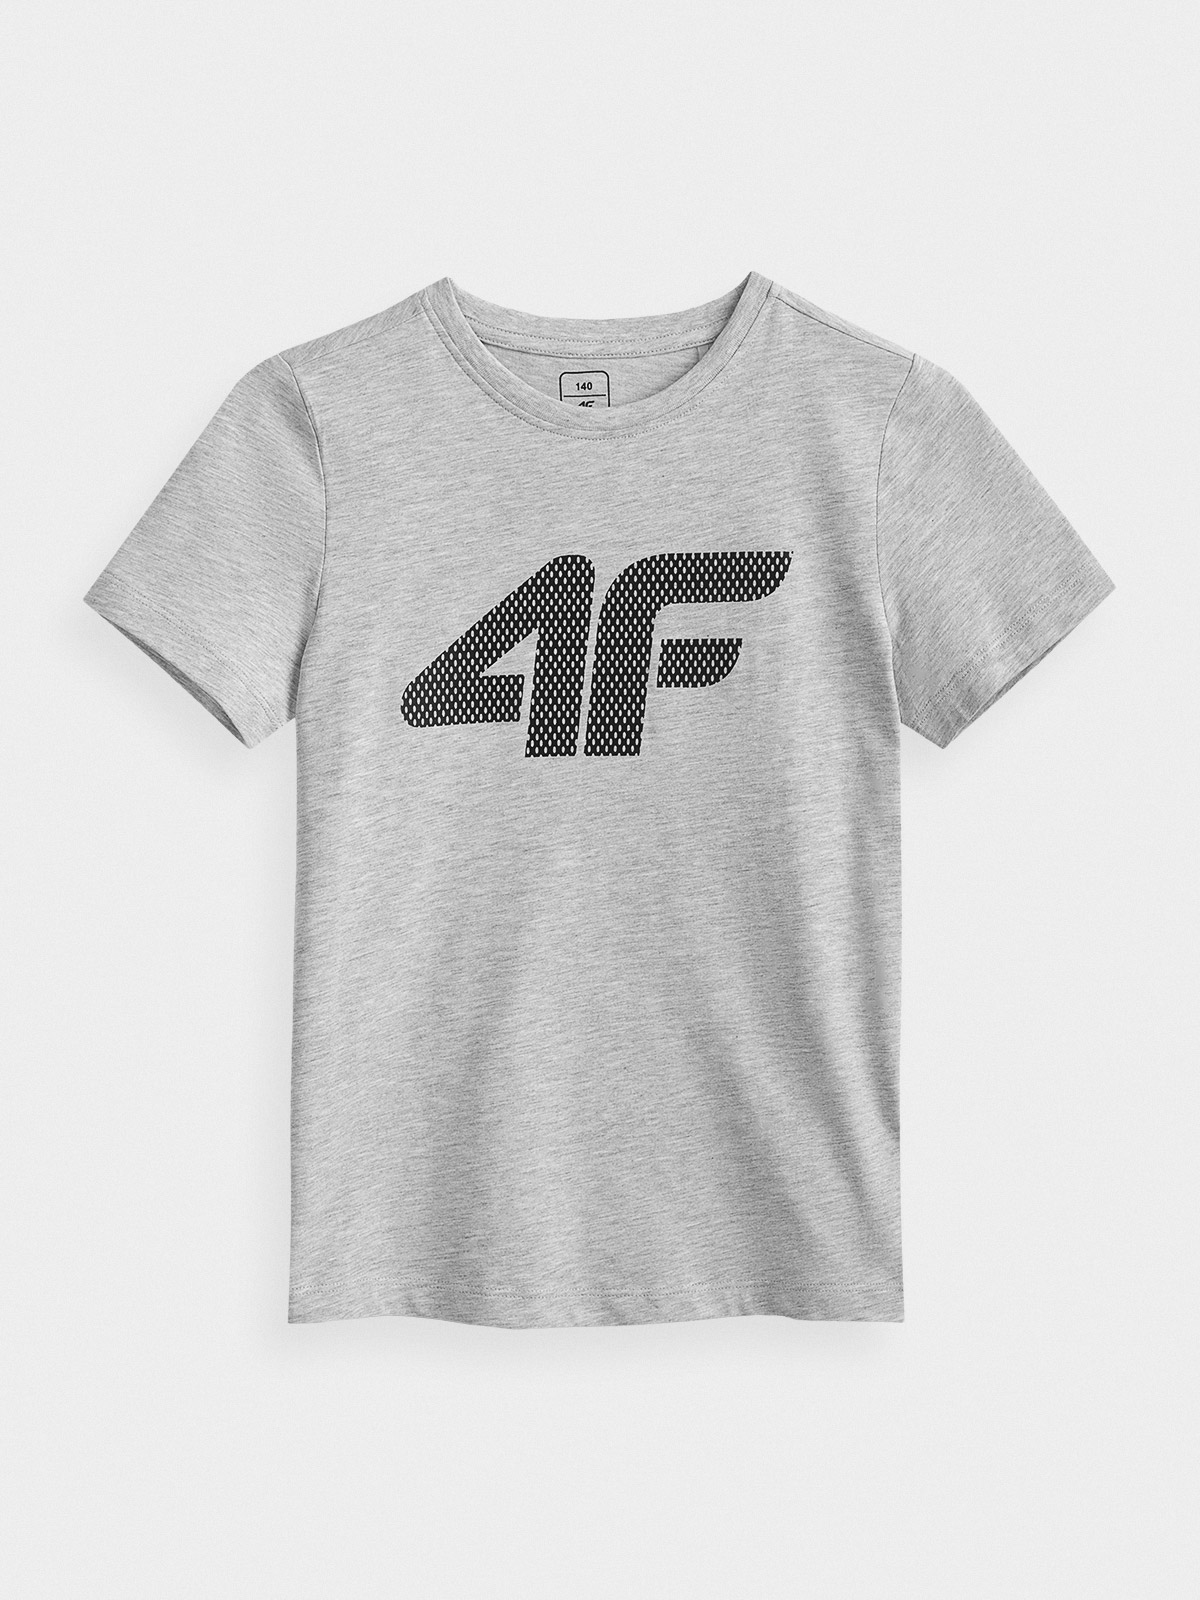 фото Футболка 4f boy's t-shirts hjz21-jtsm001-27m цв.серый р. 140